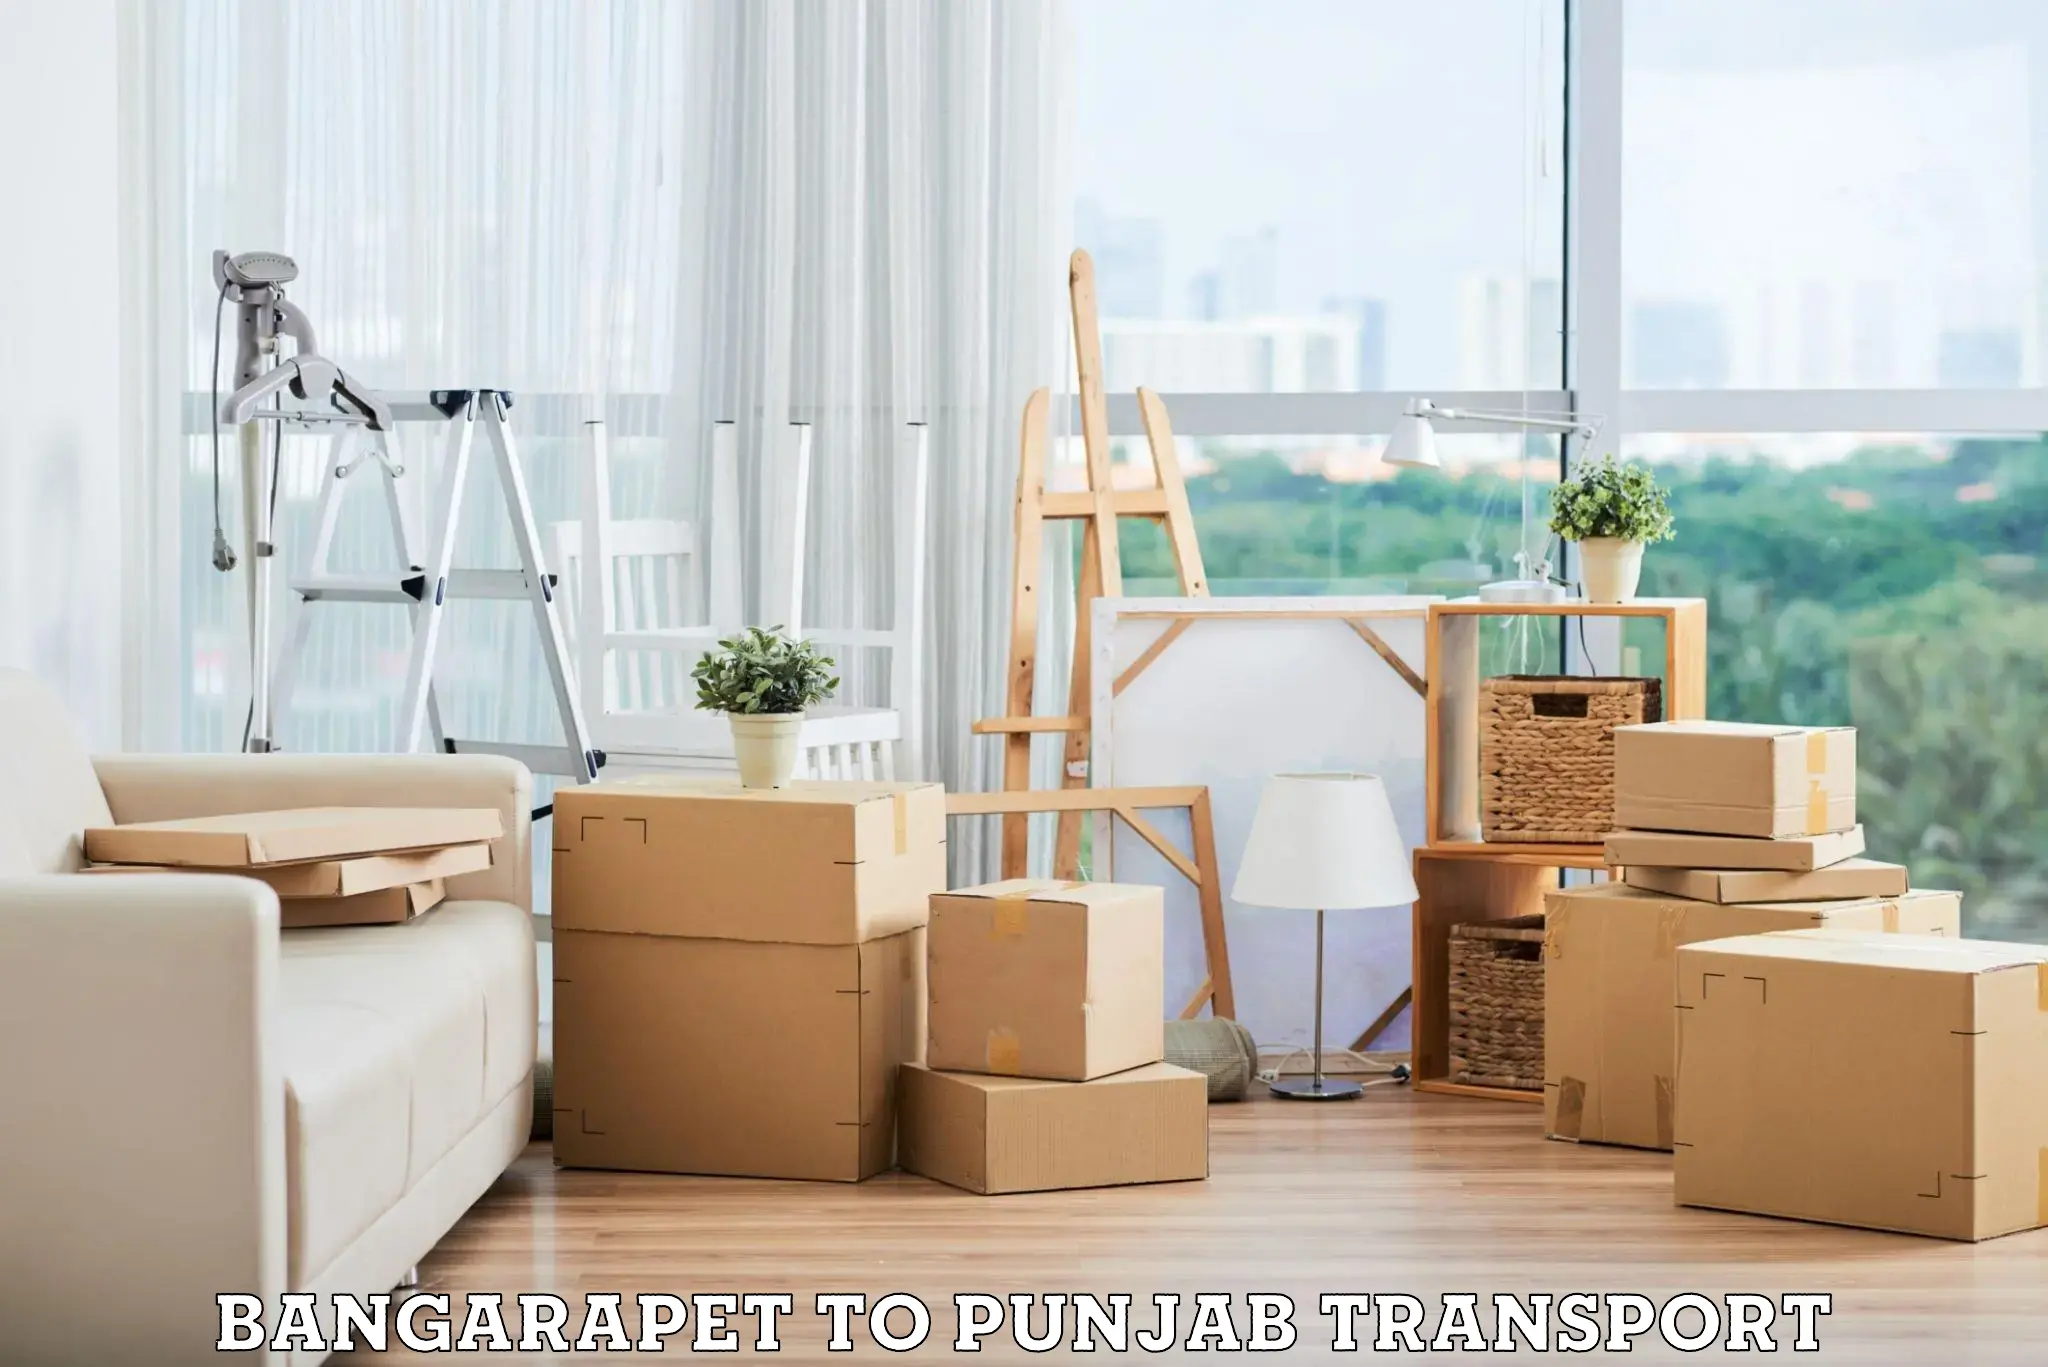 Delivery service Bangarapet to Punjab